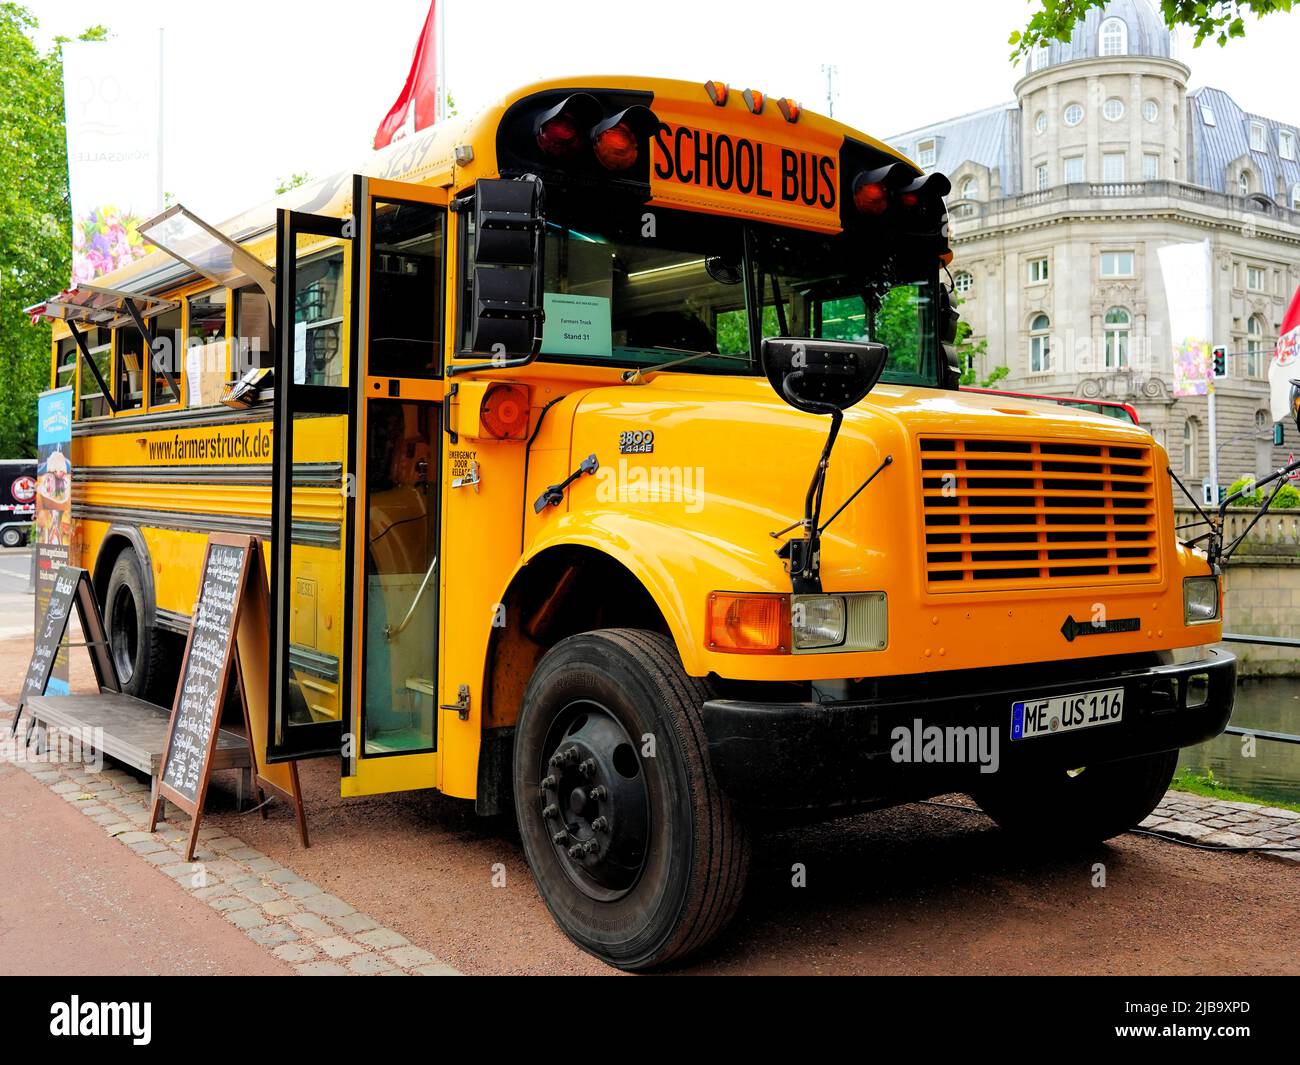 American vintage school bus serving as food truck by Farmer's Truck at Königsallee in Düsseldorf/Germany. Stock Photo